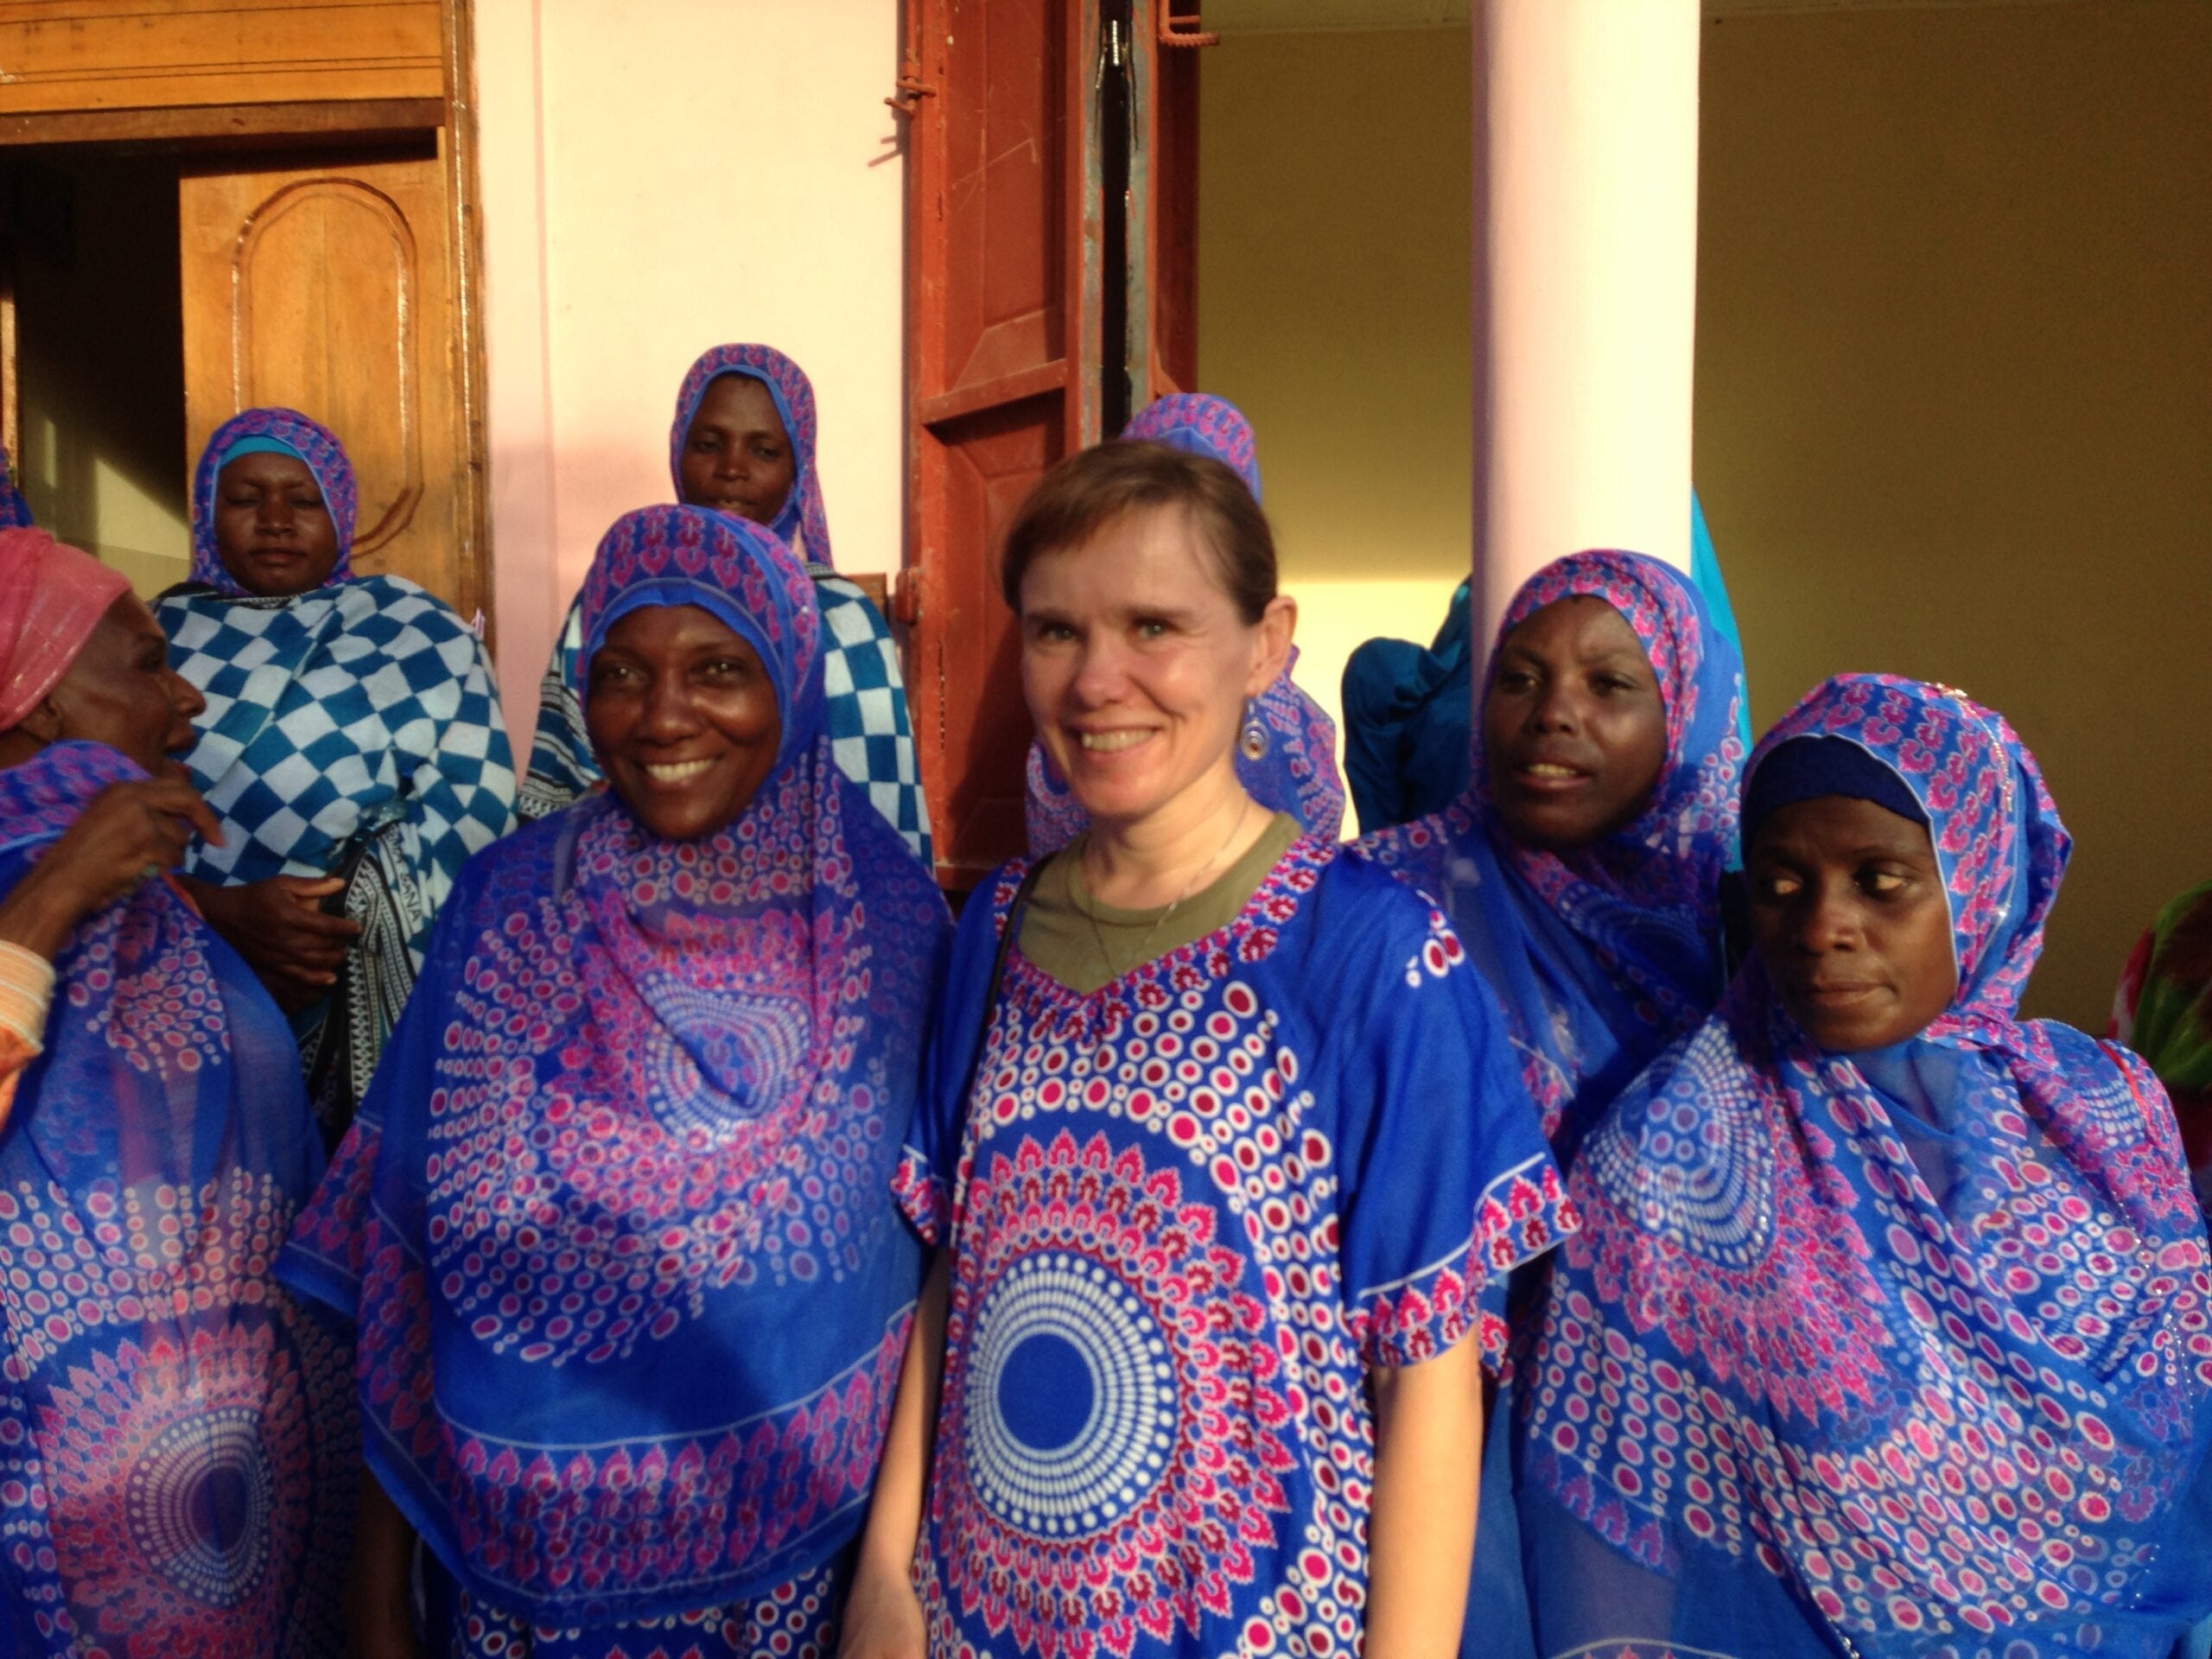 Elin Torell with women in Zanzibar